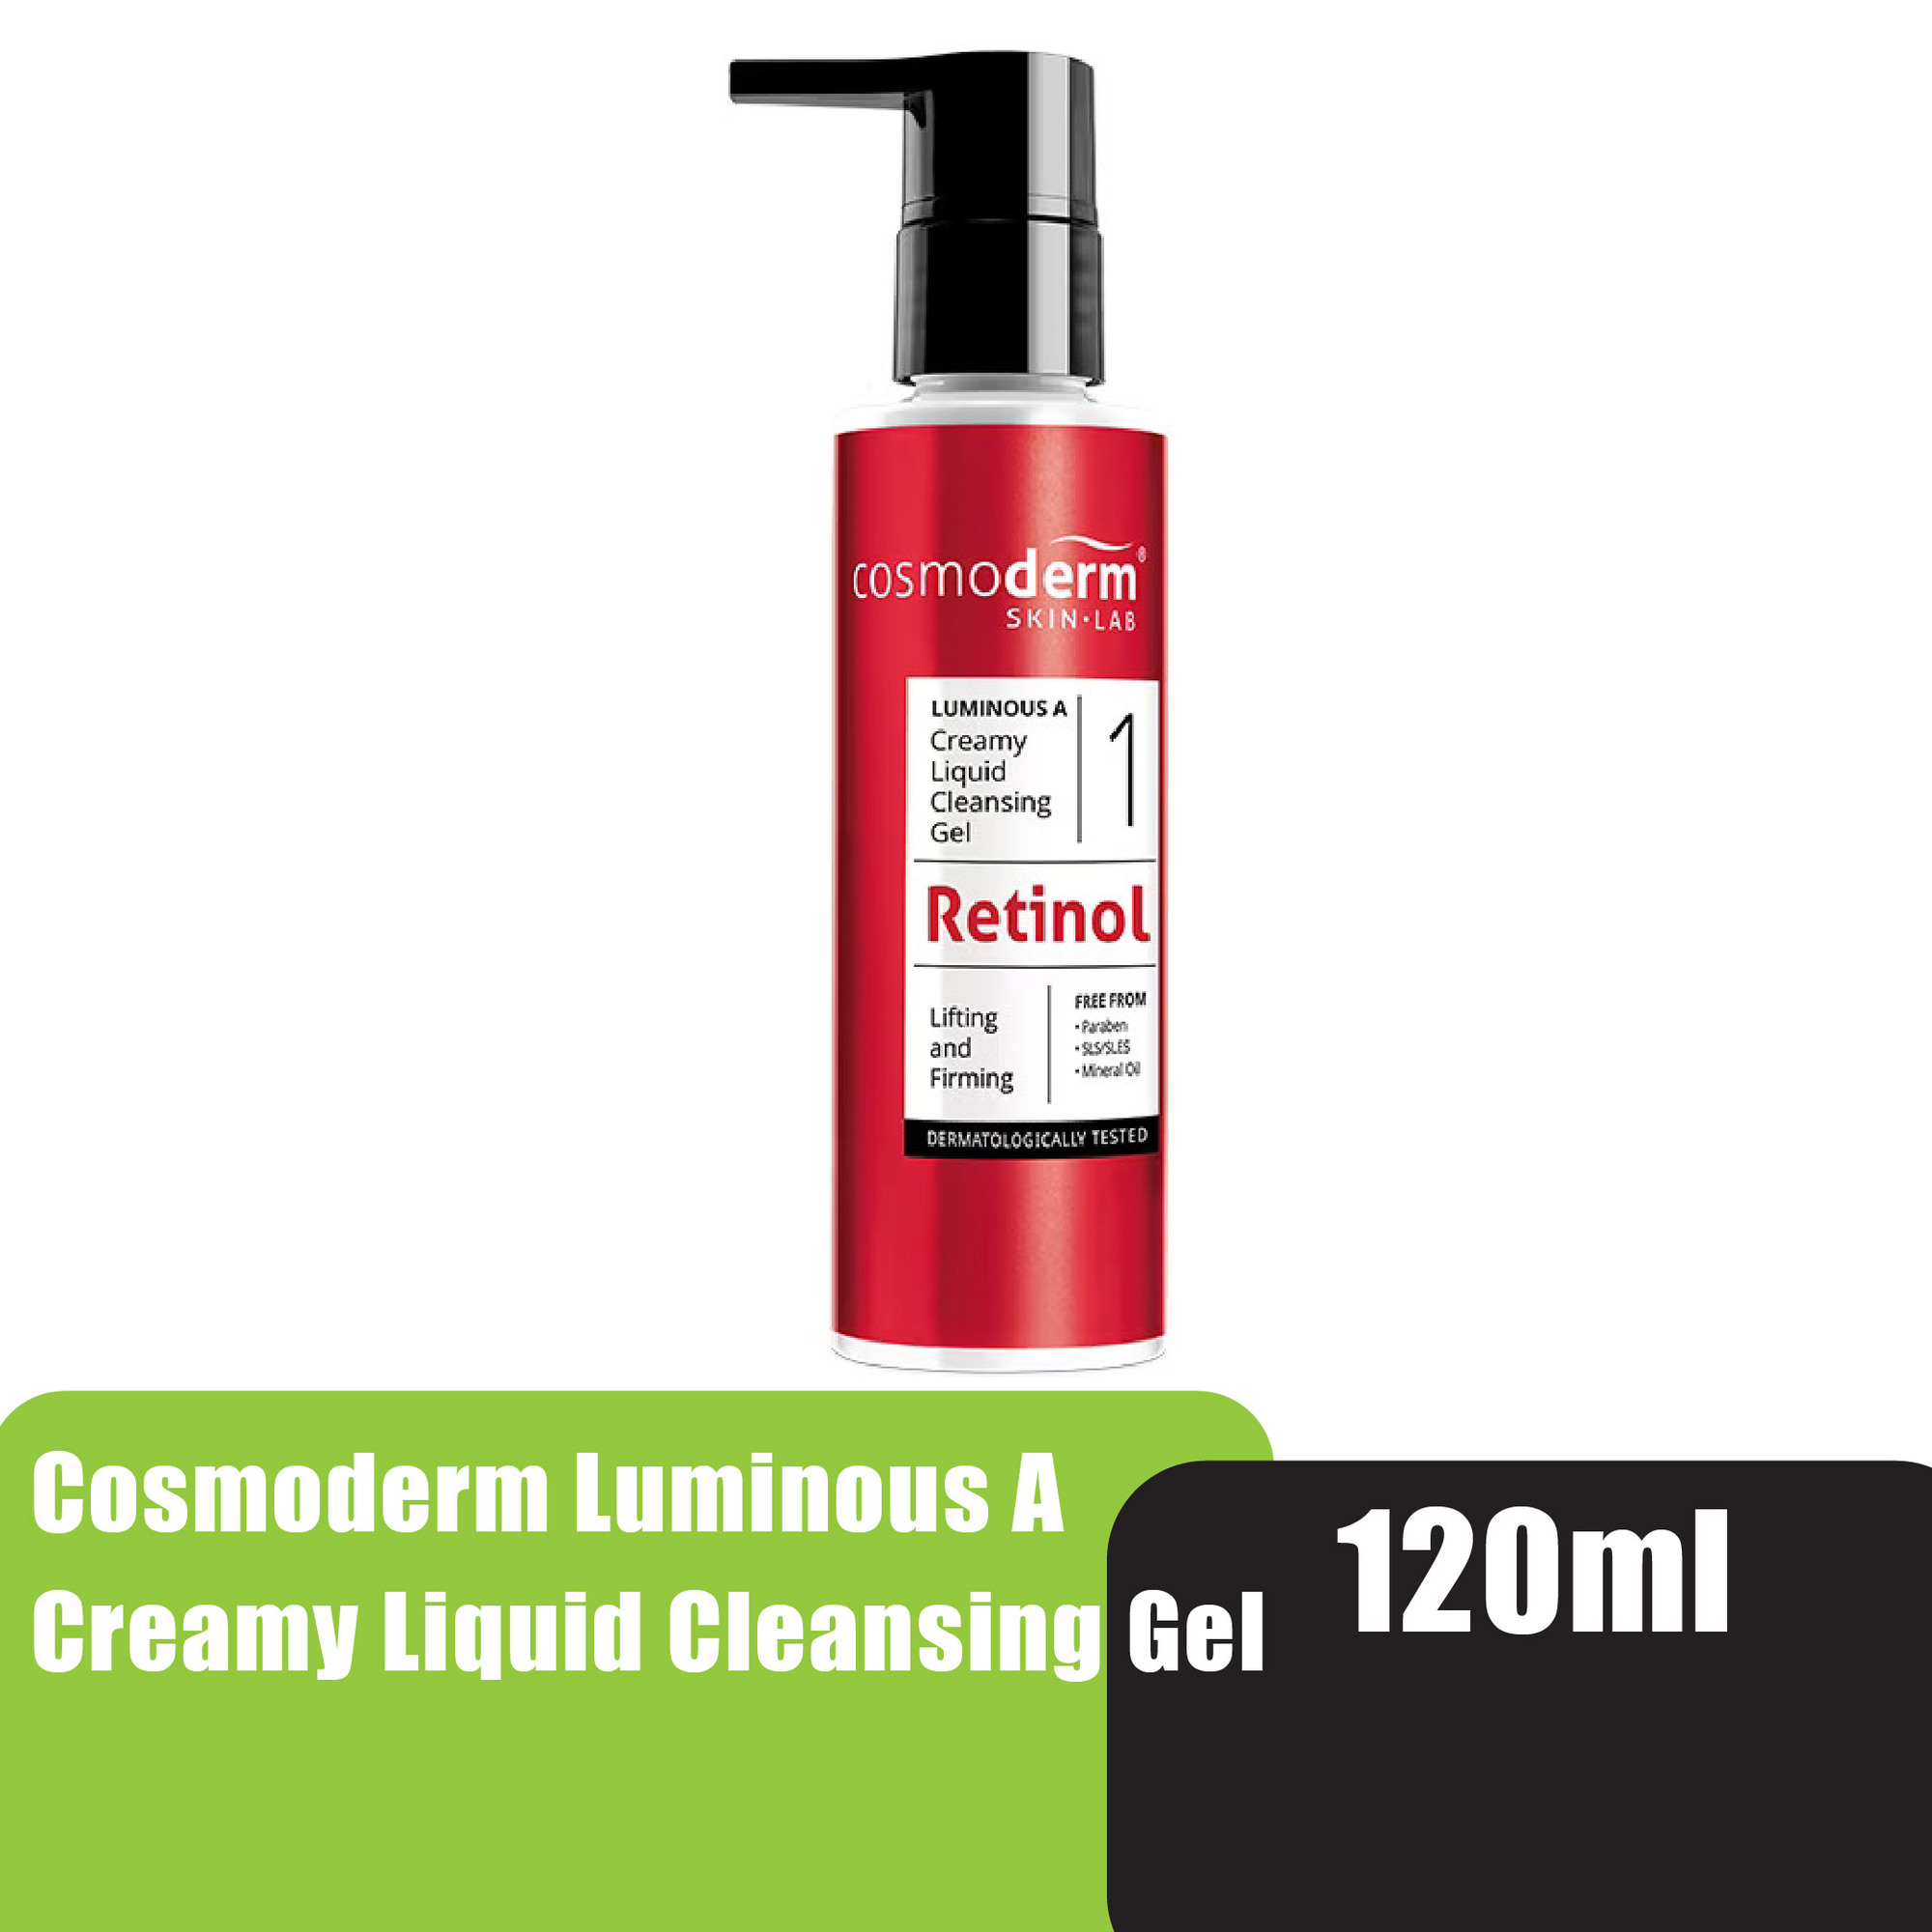 Cosmoderm Luminous A Creamy Liquid Cleansing Gel 120ml